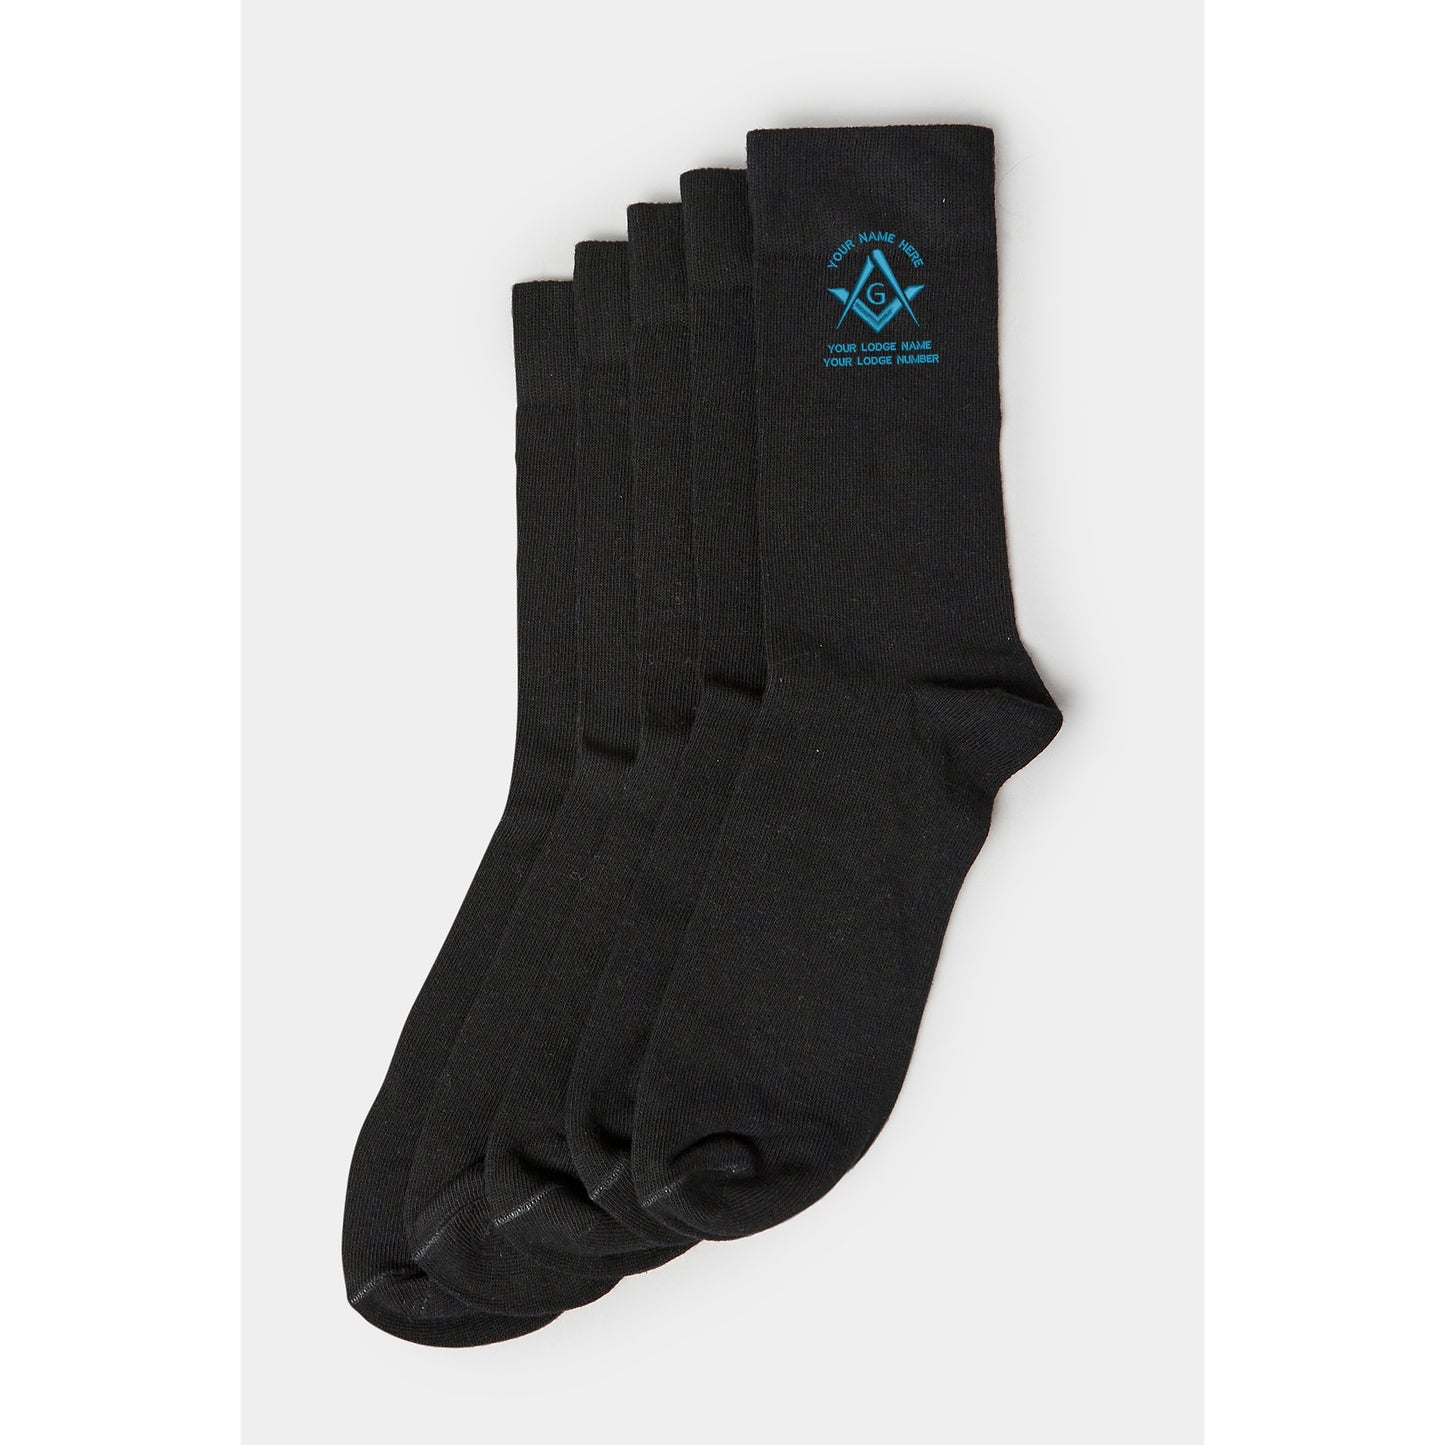 Masonic Craft Lodge Personalised Socks